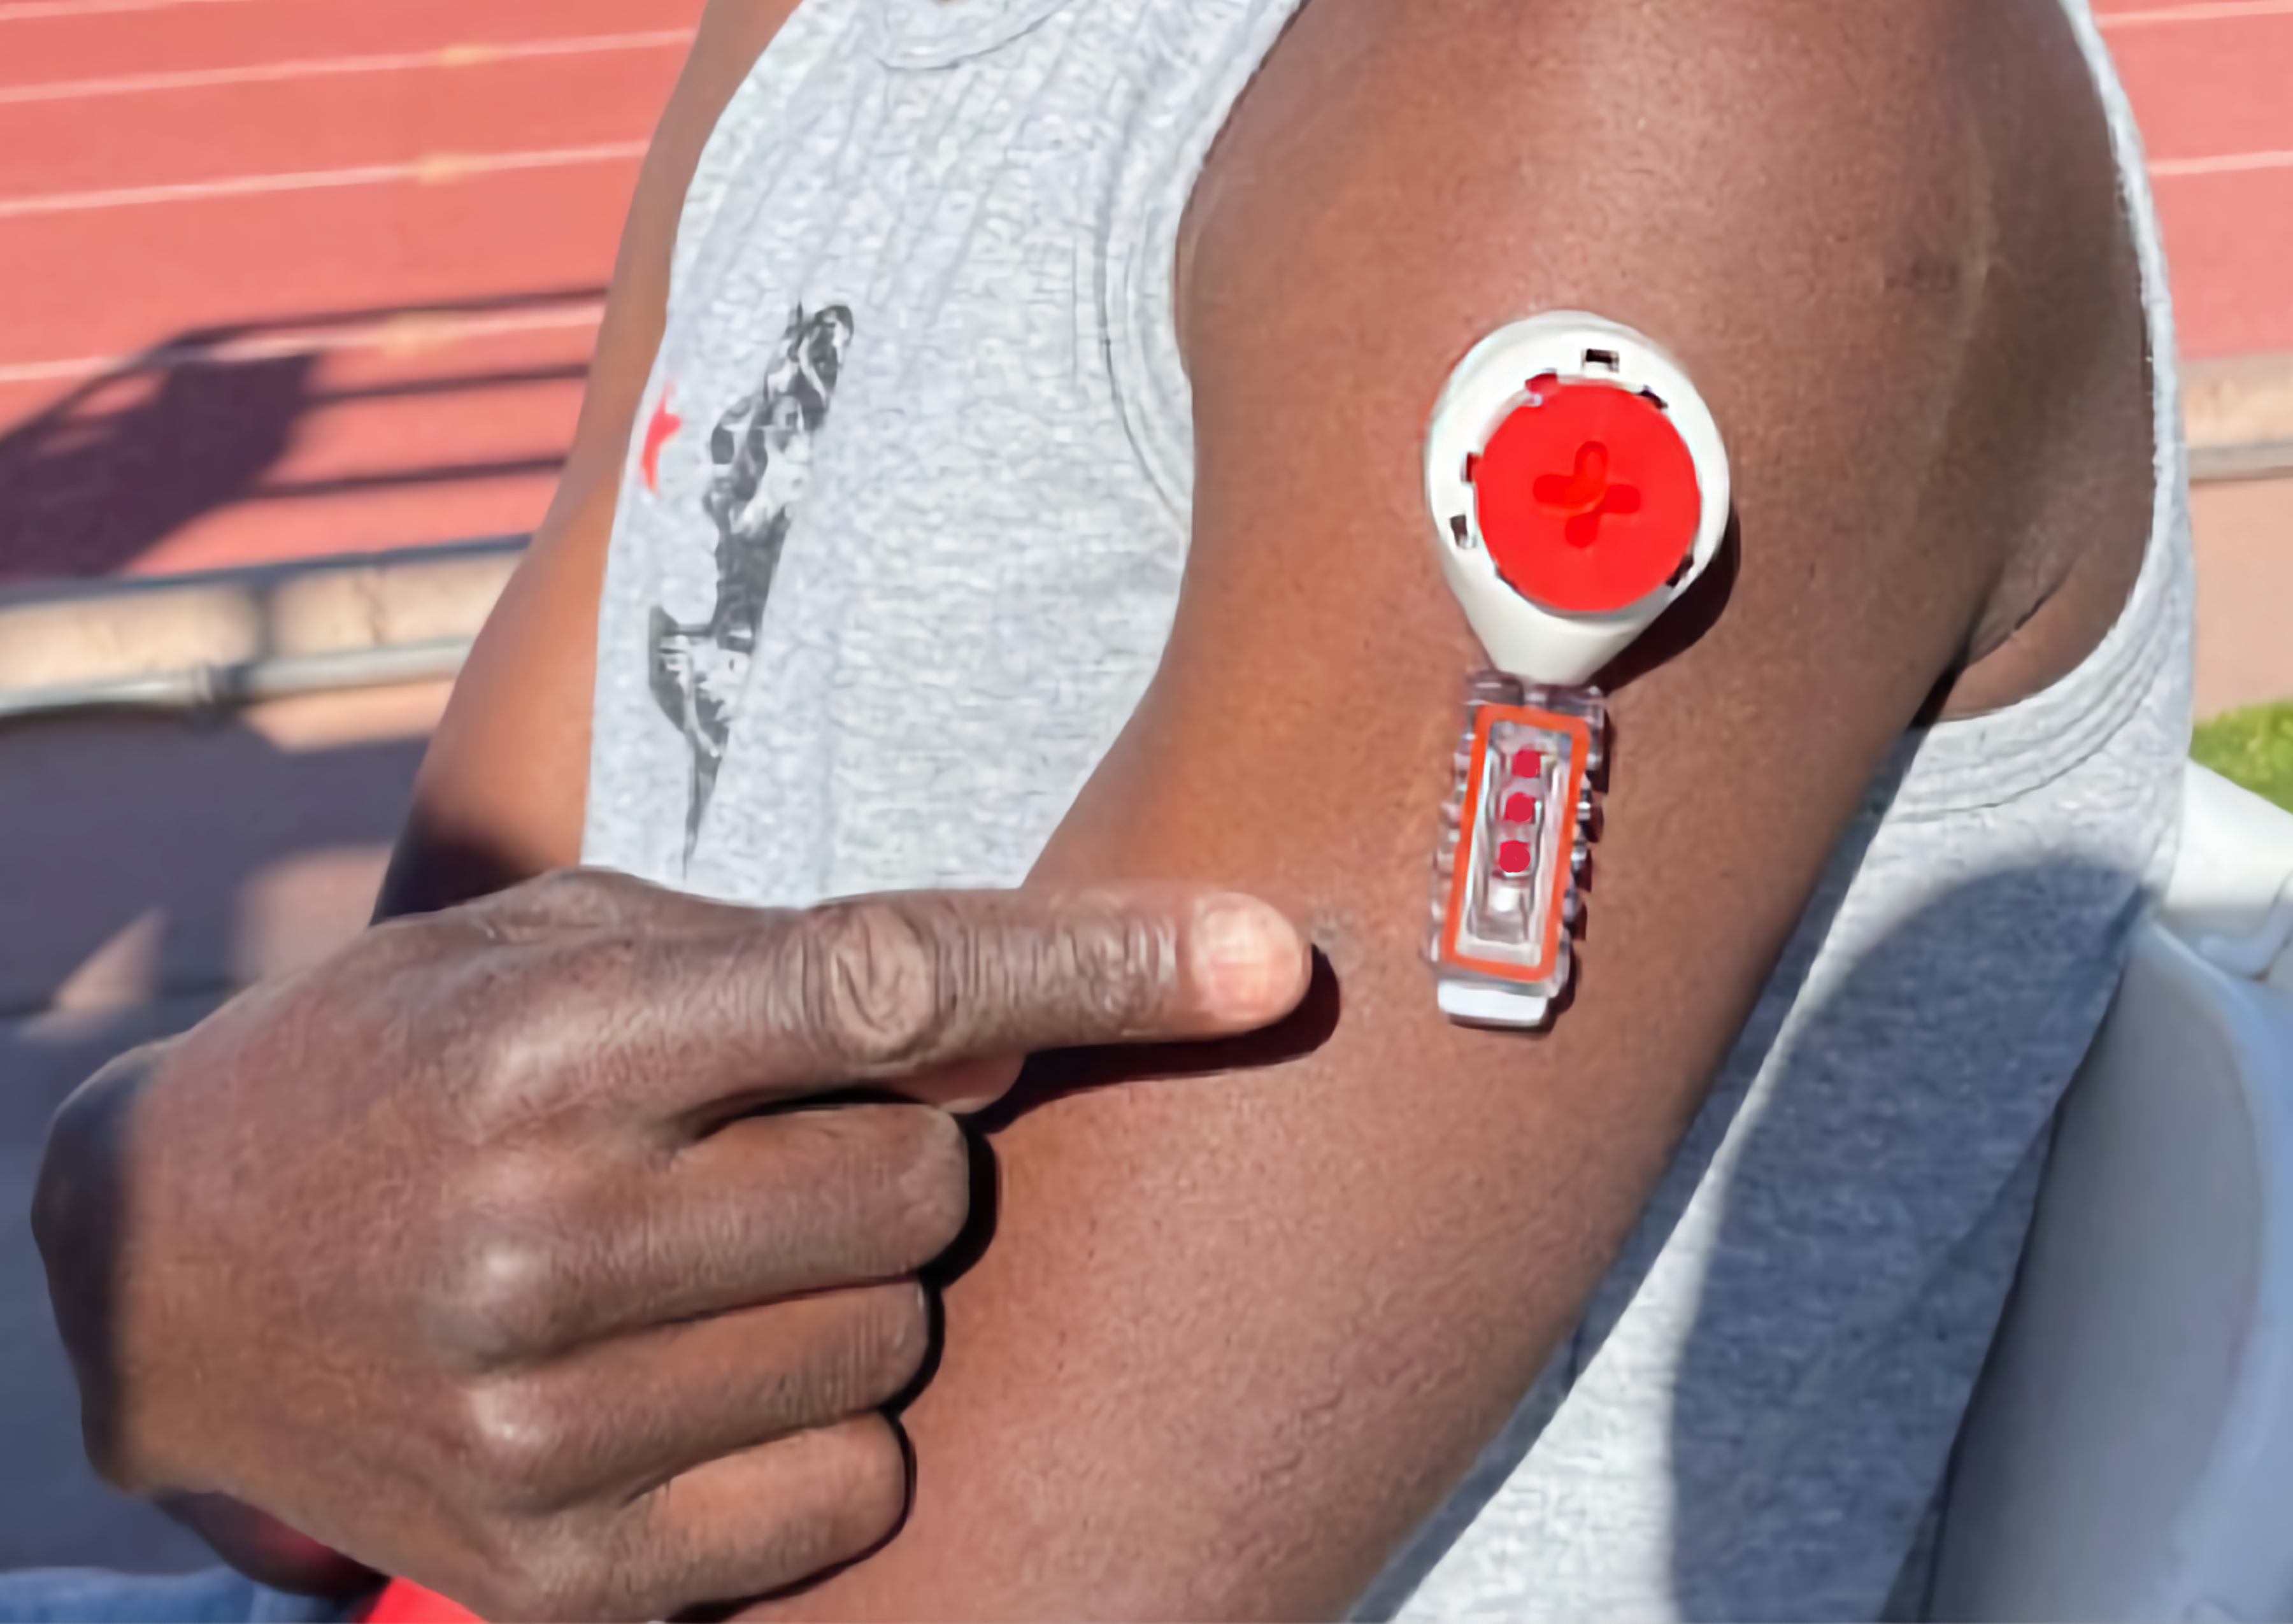 Tasso M20 device on athlete's arm